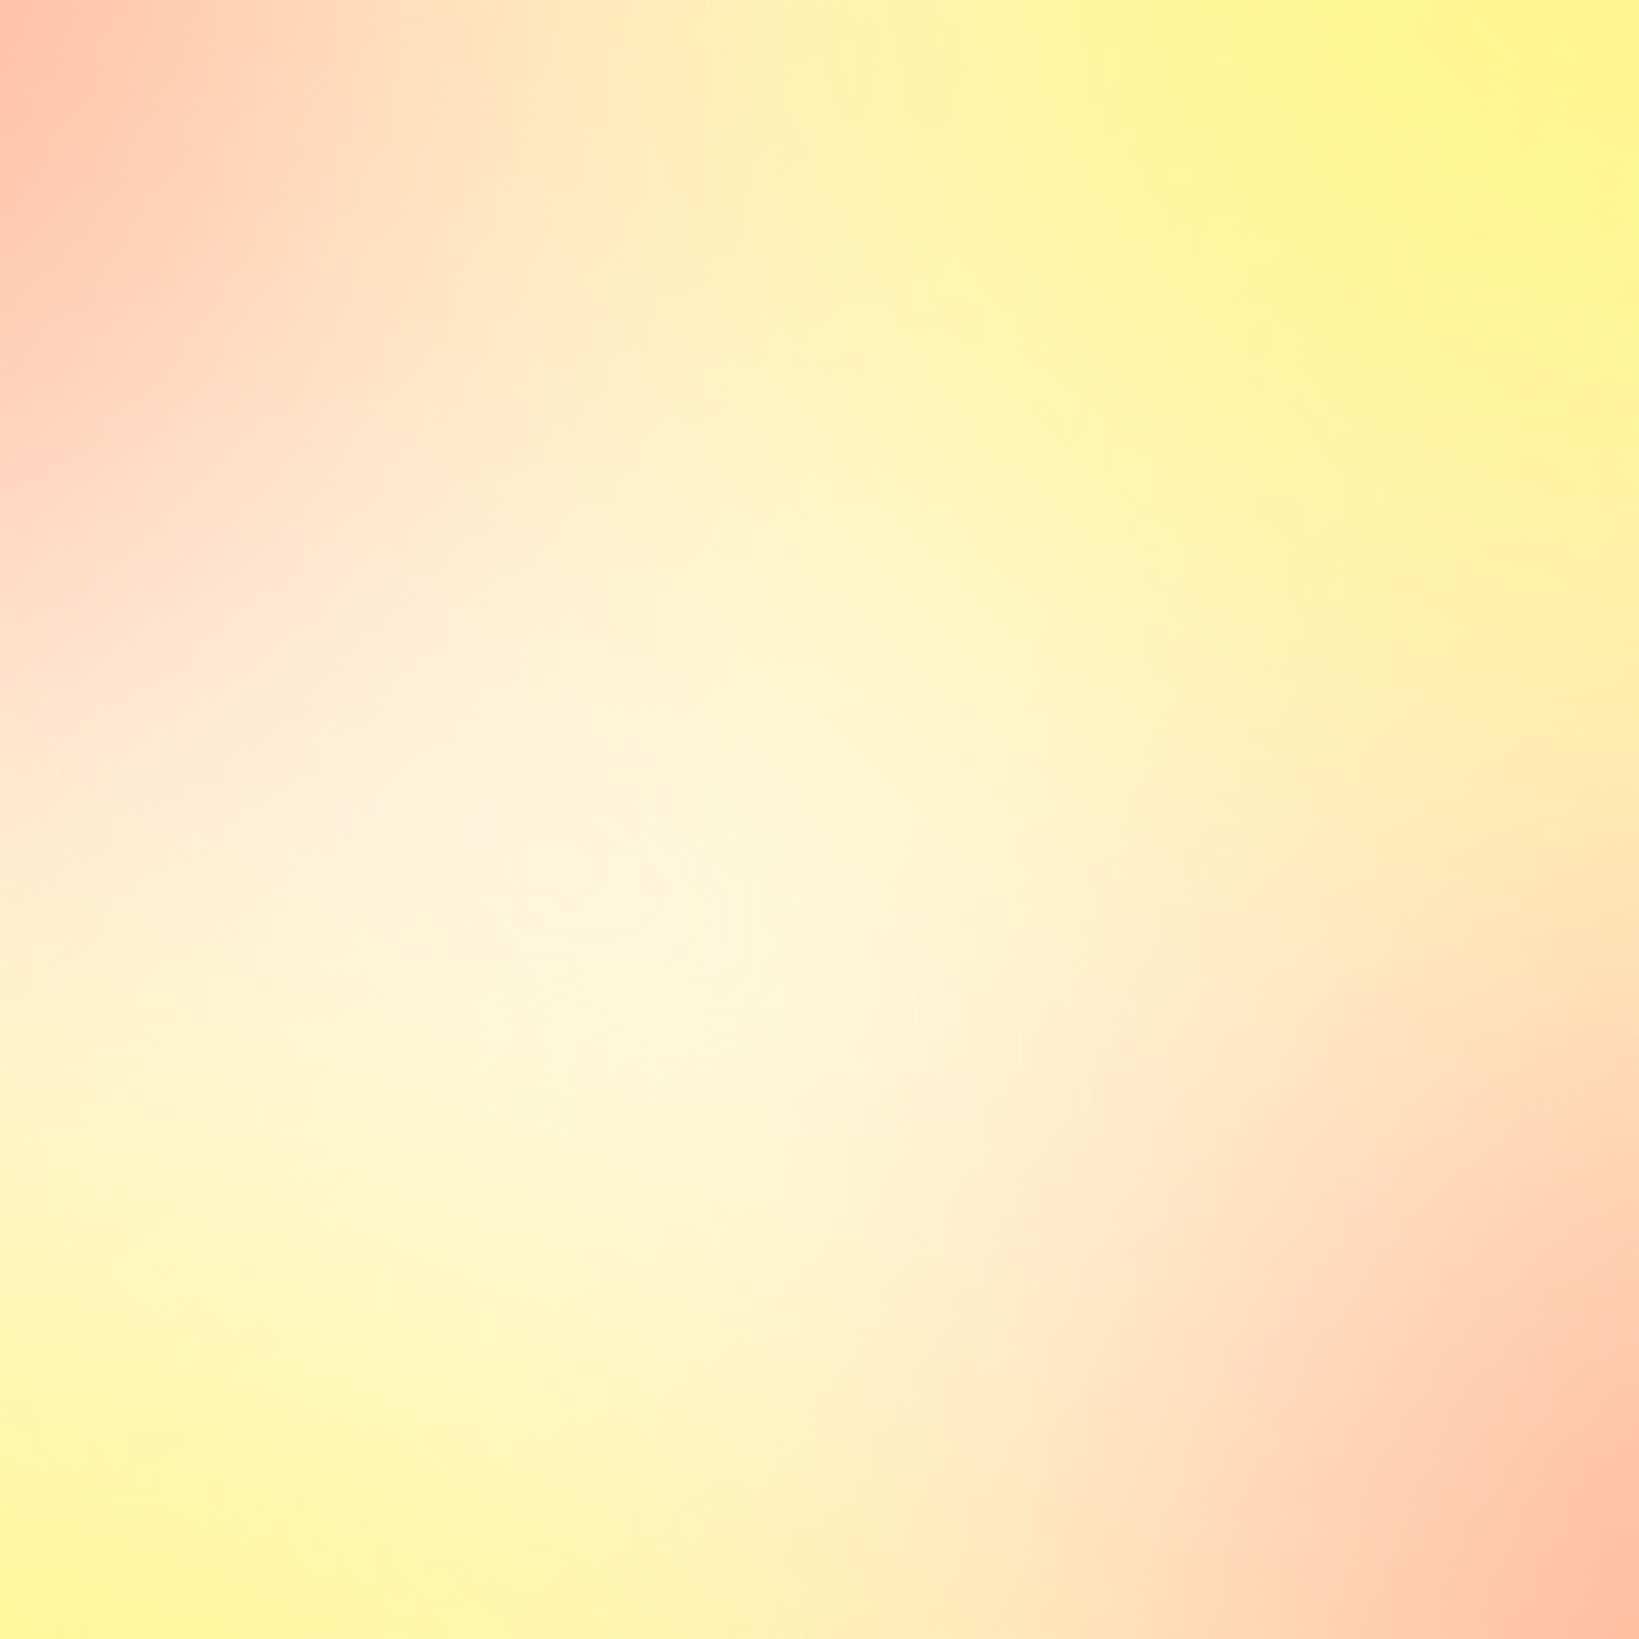 Yellow orange pastel gradient background